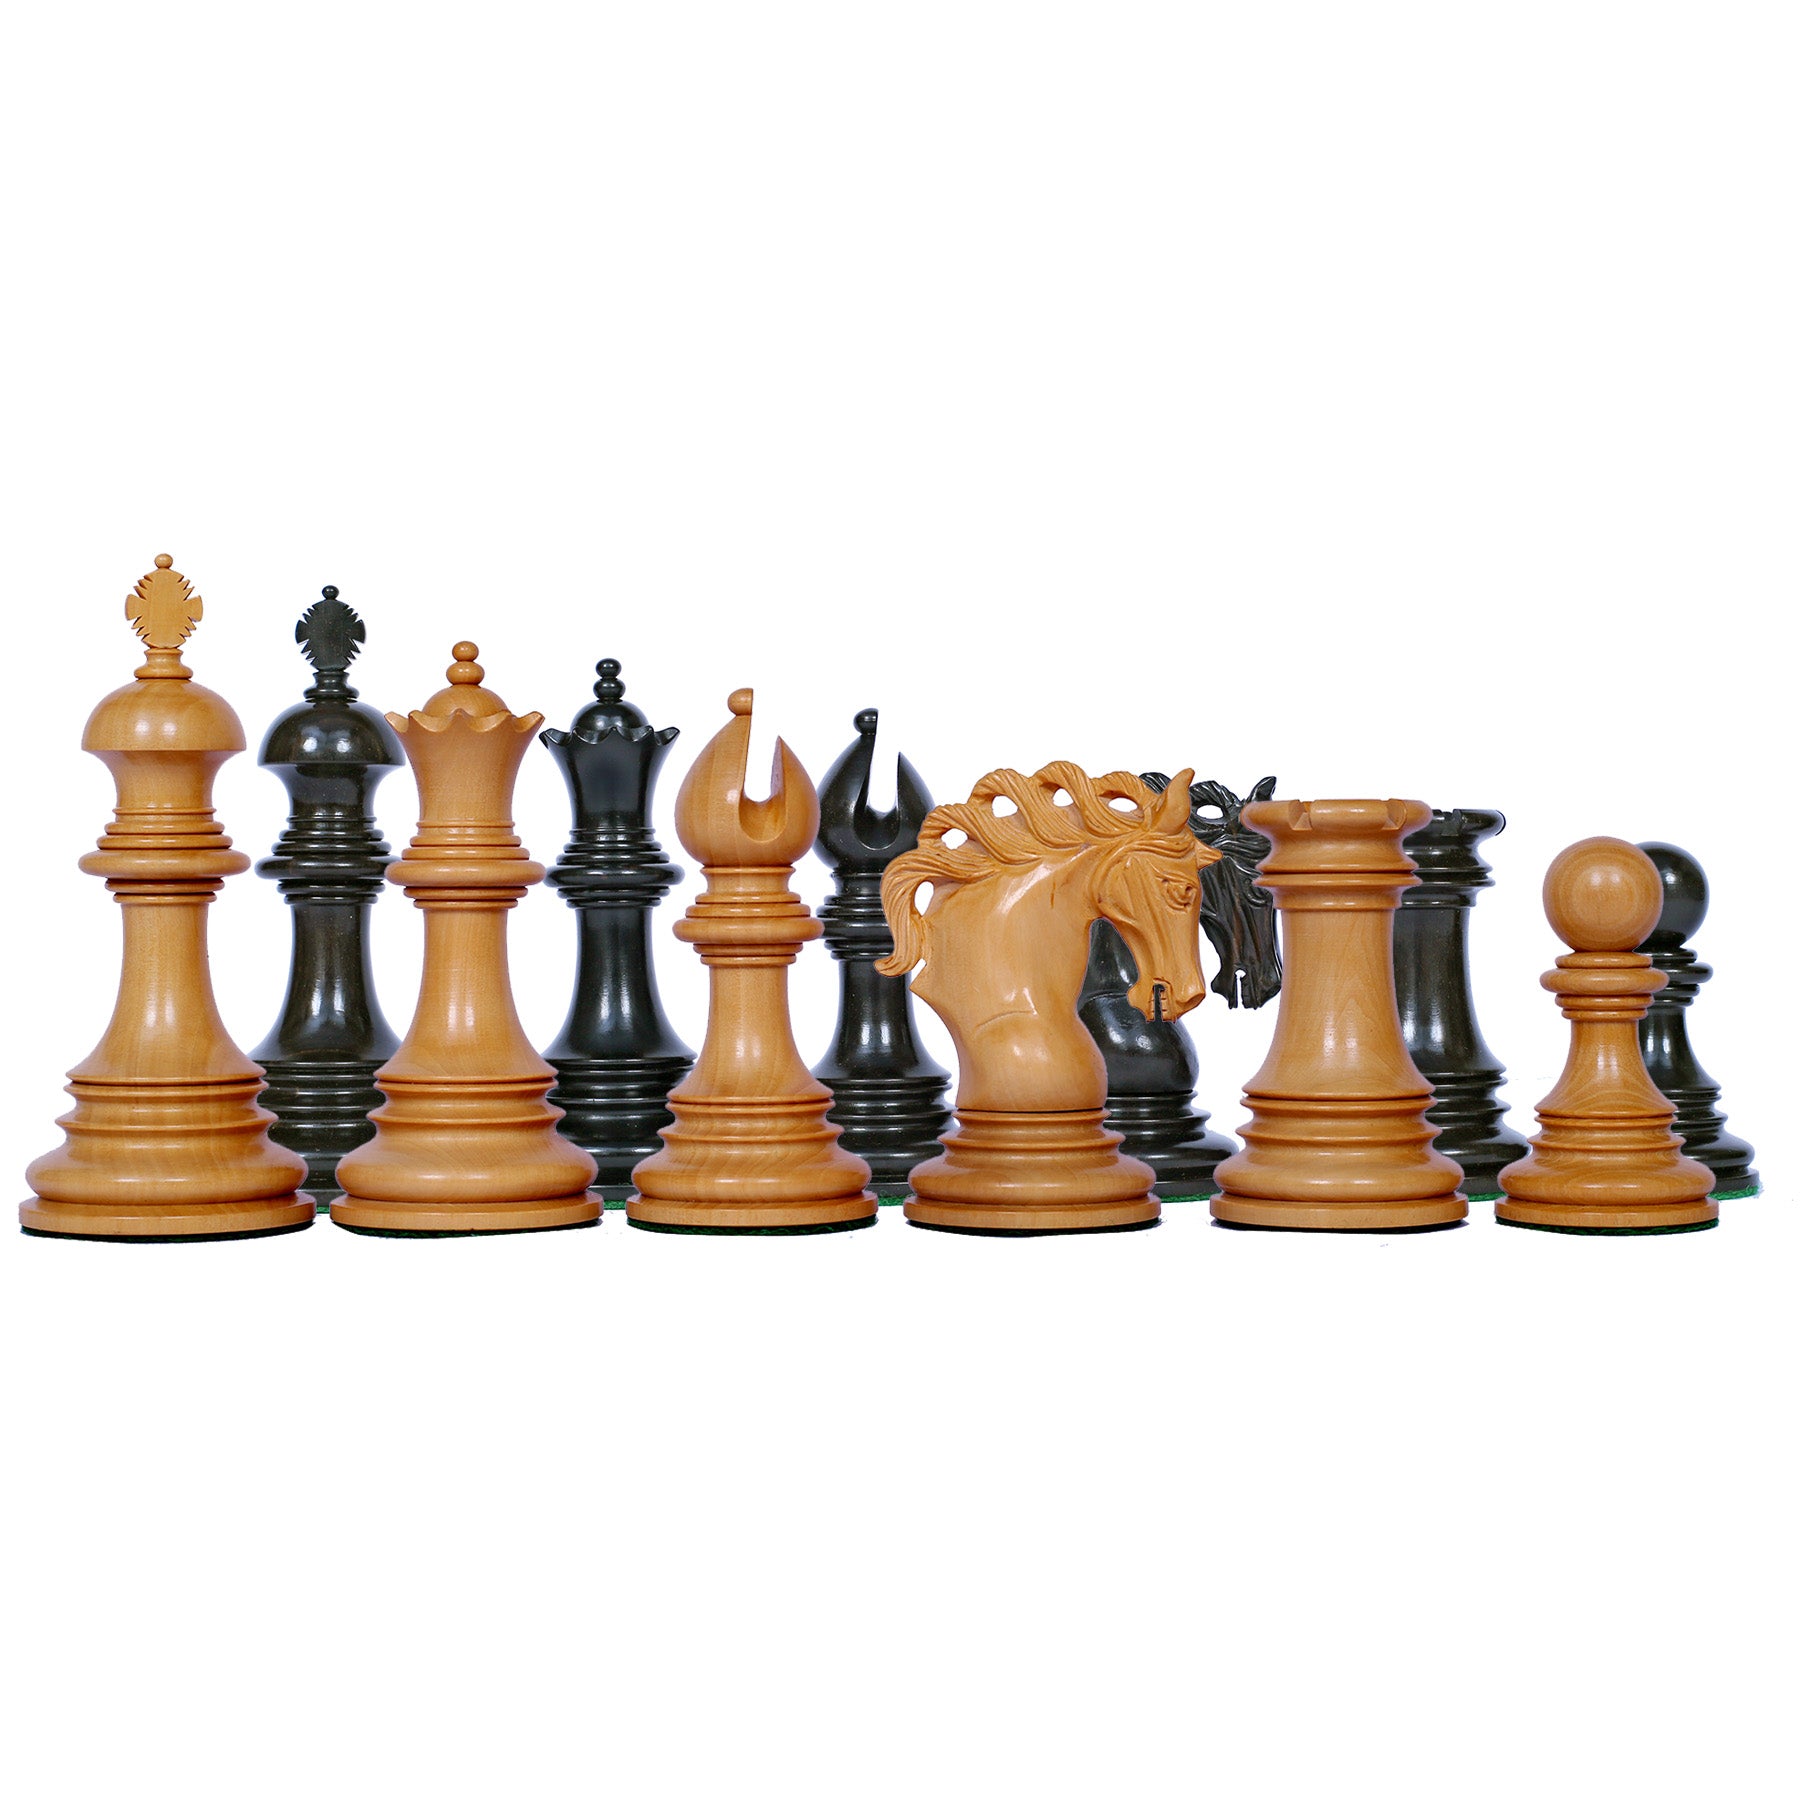 The 4Nf6 Caro-Kann - Davies – Chess House